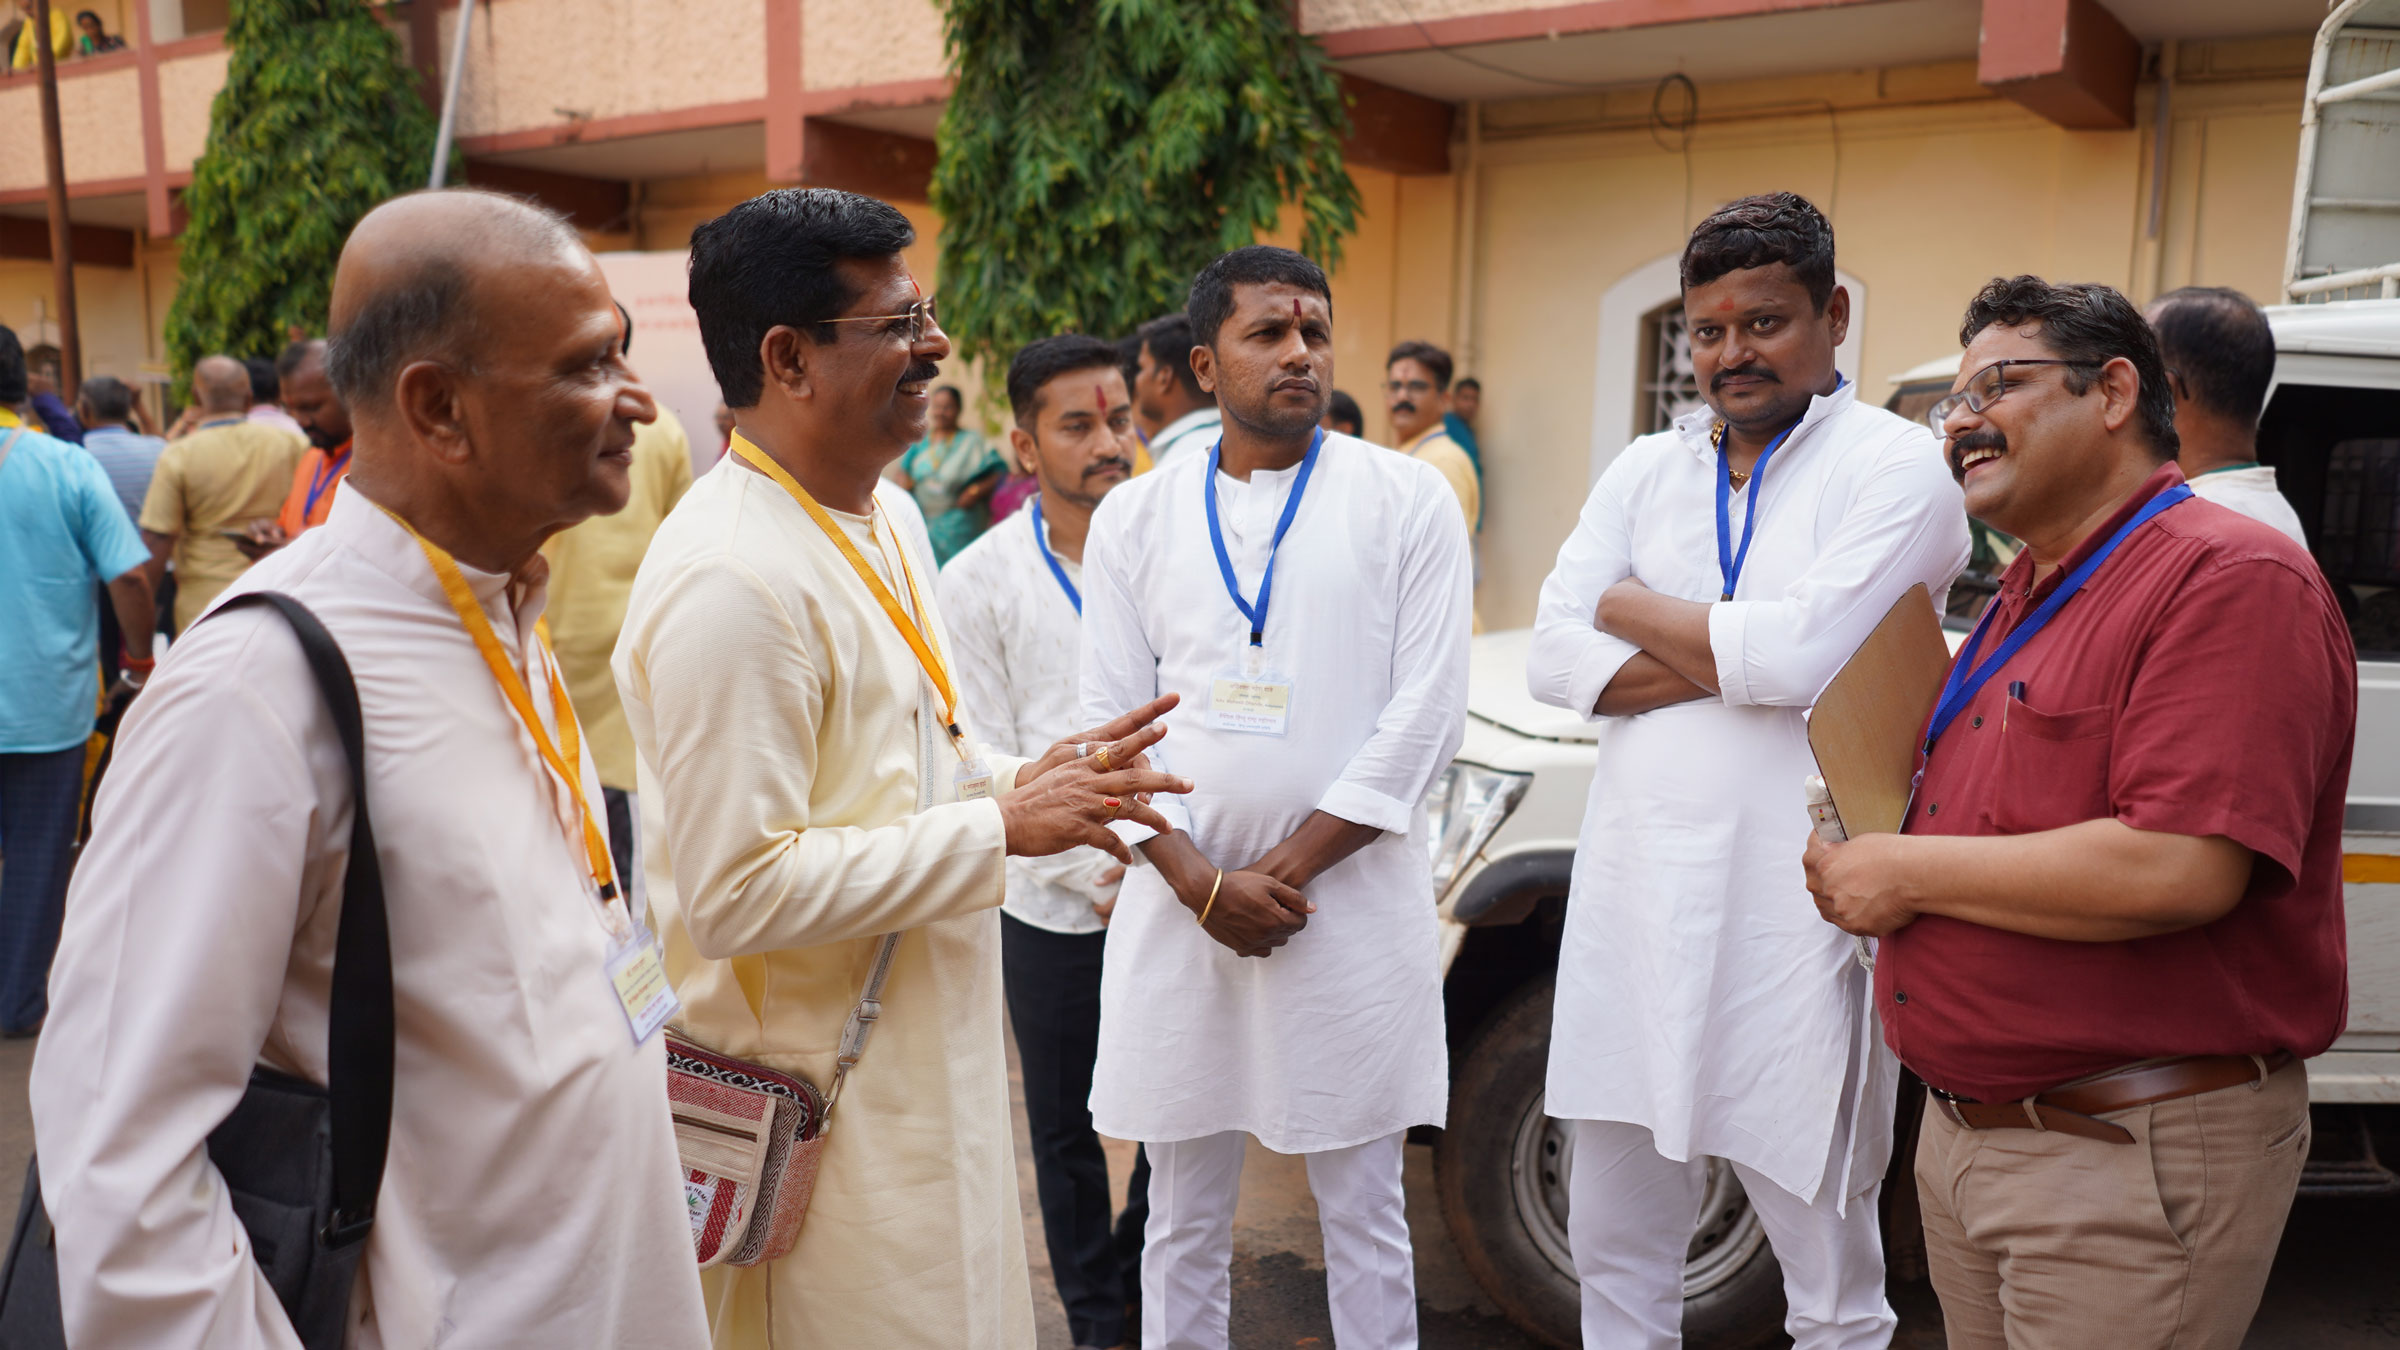 Devout Hindus informally discussing various topics with (From left) Mr Rajan Bunage (Coordinator, Hindu Janajagruti Samiti, Solapur, Maharashtra) and Mr Manojkumar Khadaye (Rajya Sangathak, Hindu Janajagruti Samiti, Konkan, West Maharashtra and Gujarat)